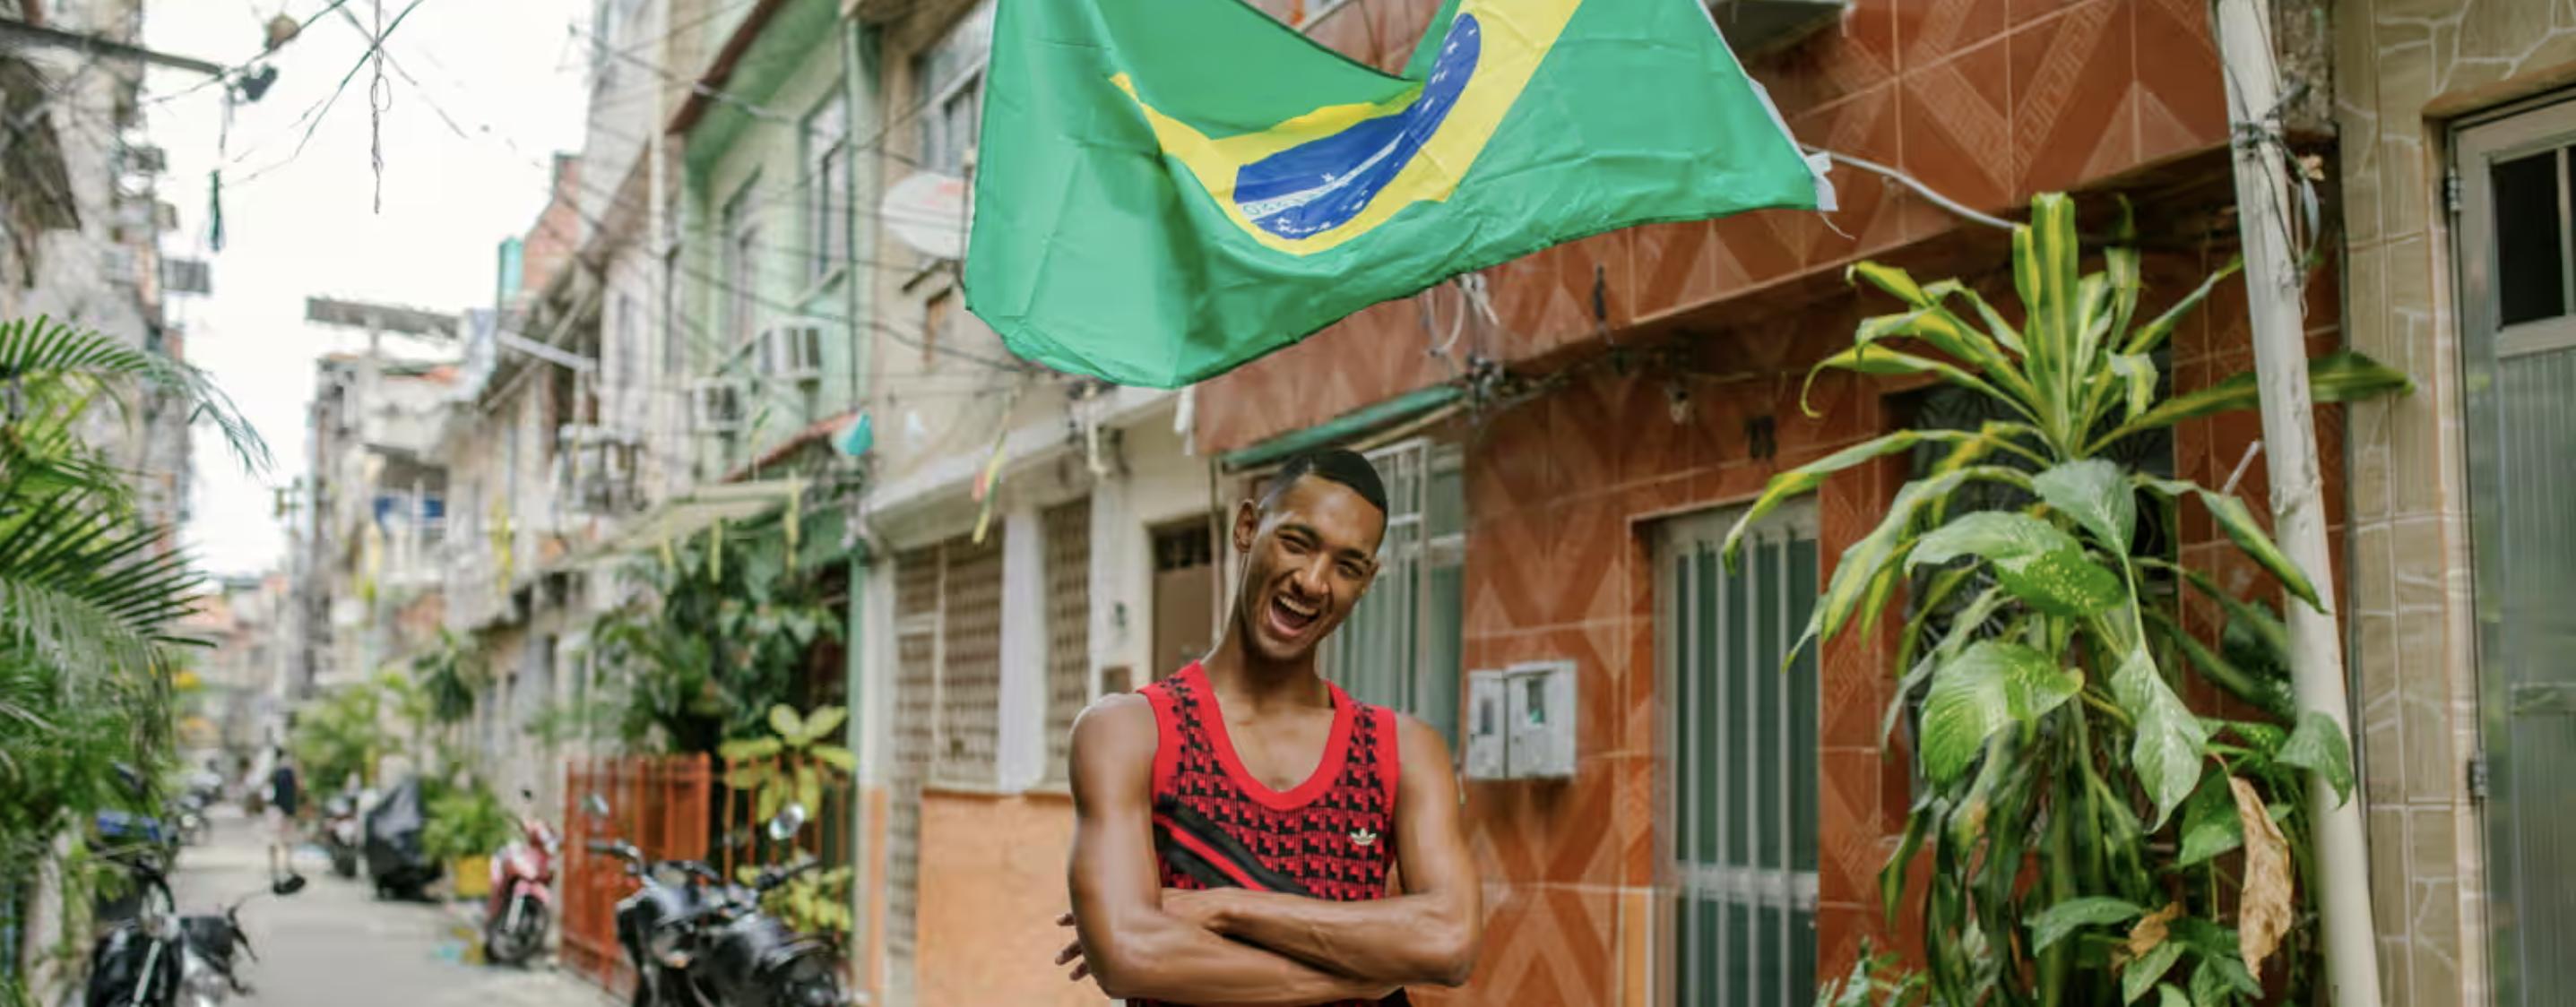 Raphael Vicente nas ruas do Complexo da Mare. Foto: Kristin-Bethge / The Guardian